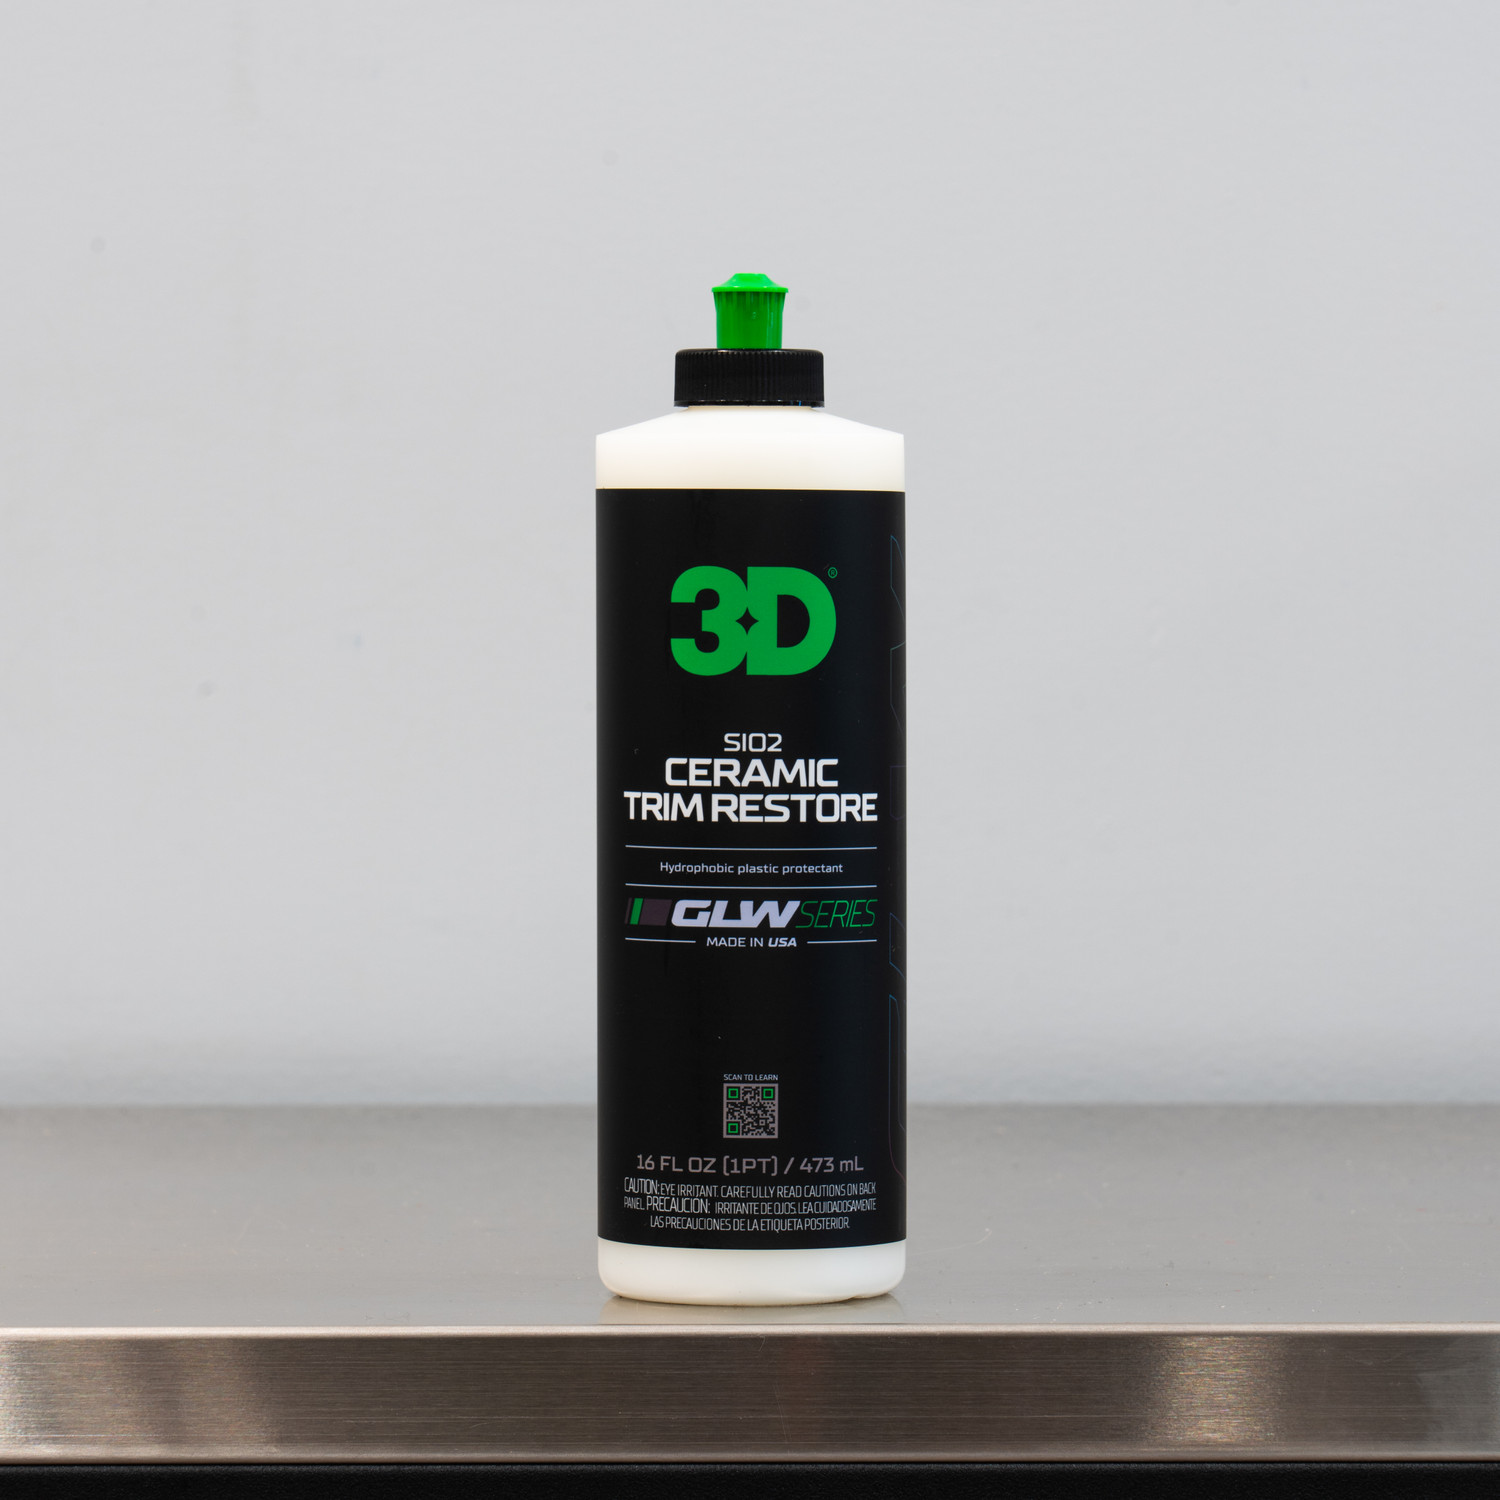 3D GLW Series SI02 Ceramic Trim Restorer 16oz, Restores and Conditions